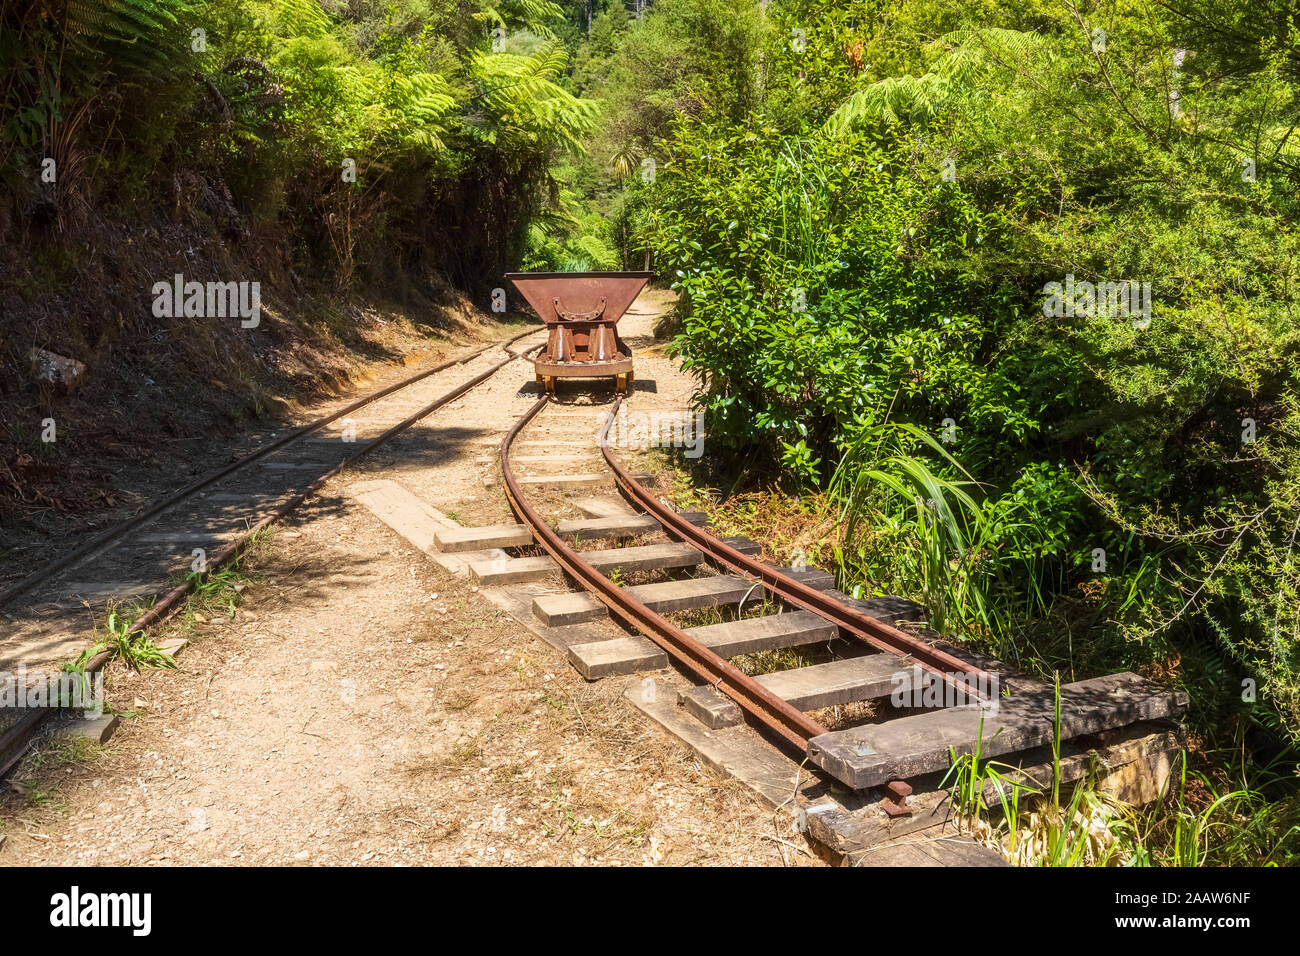 New Zealand, North Island, Waikato, landscape with railroad tracks Stock Photo